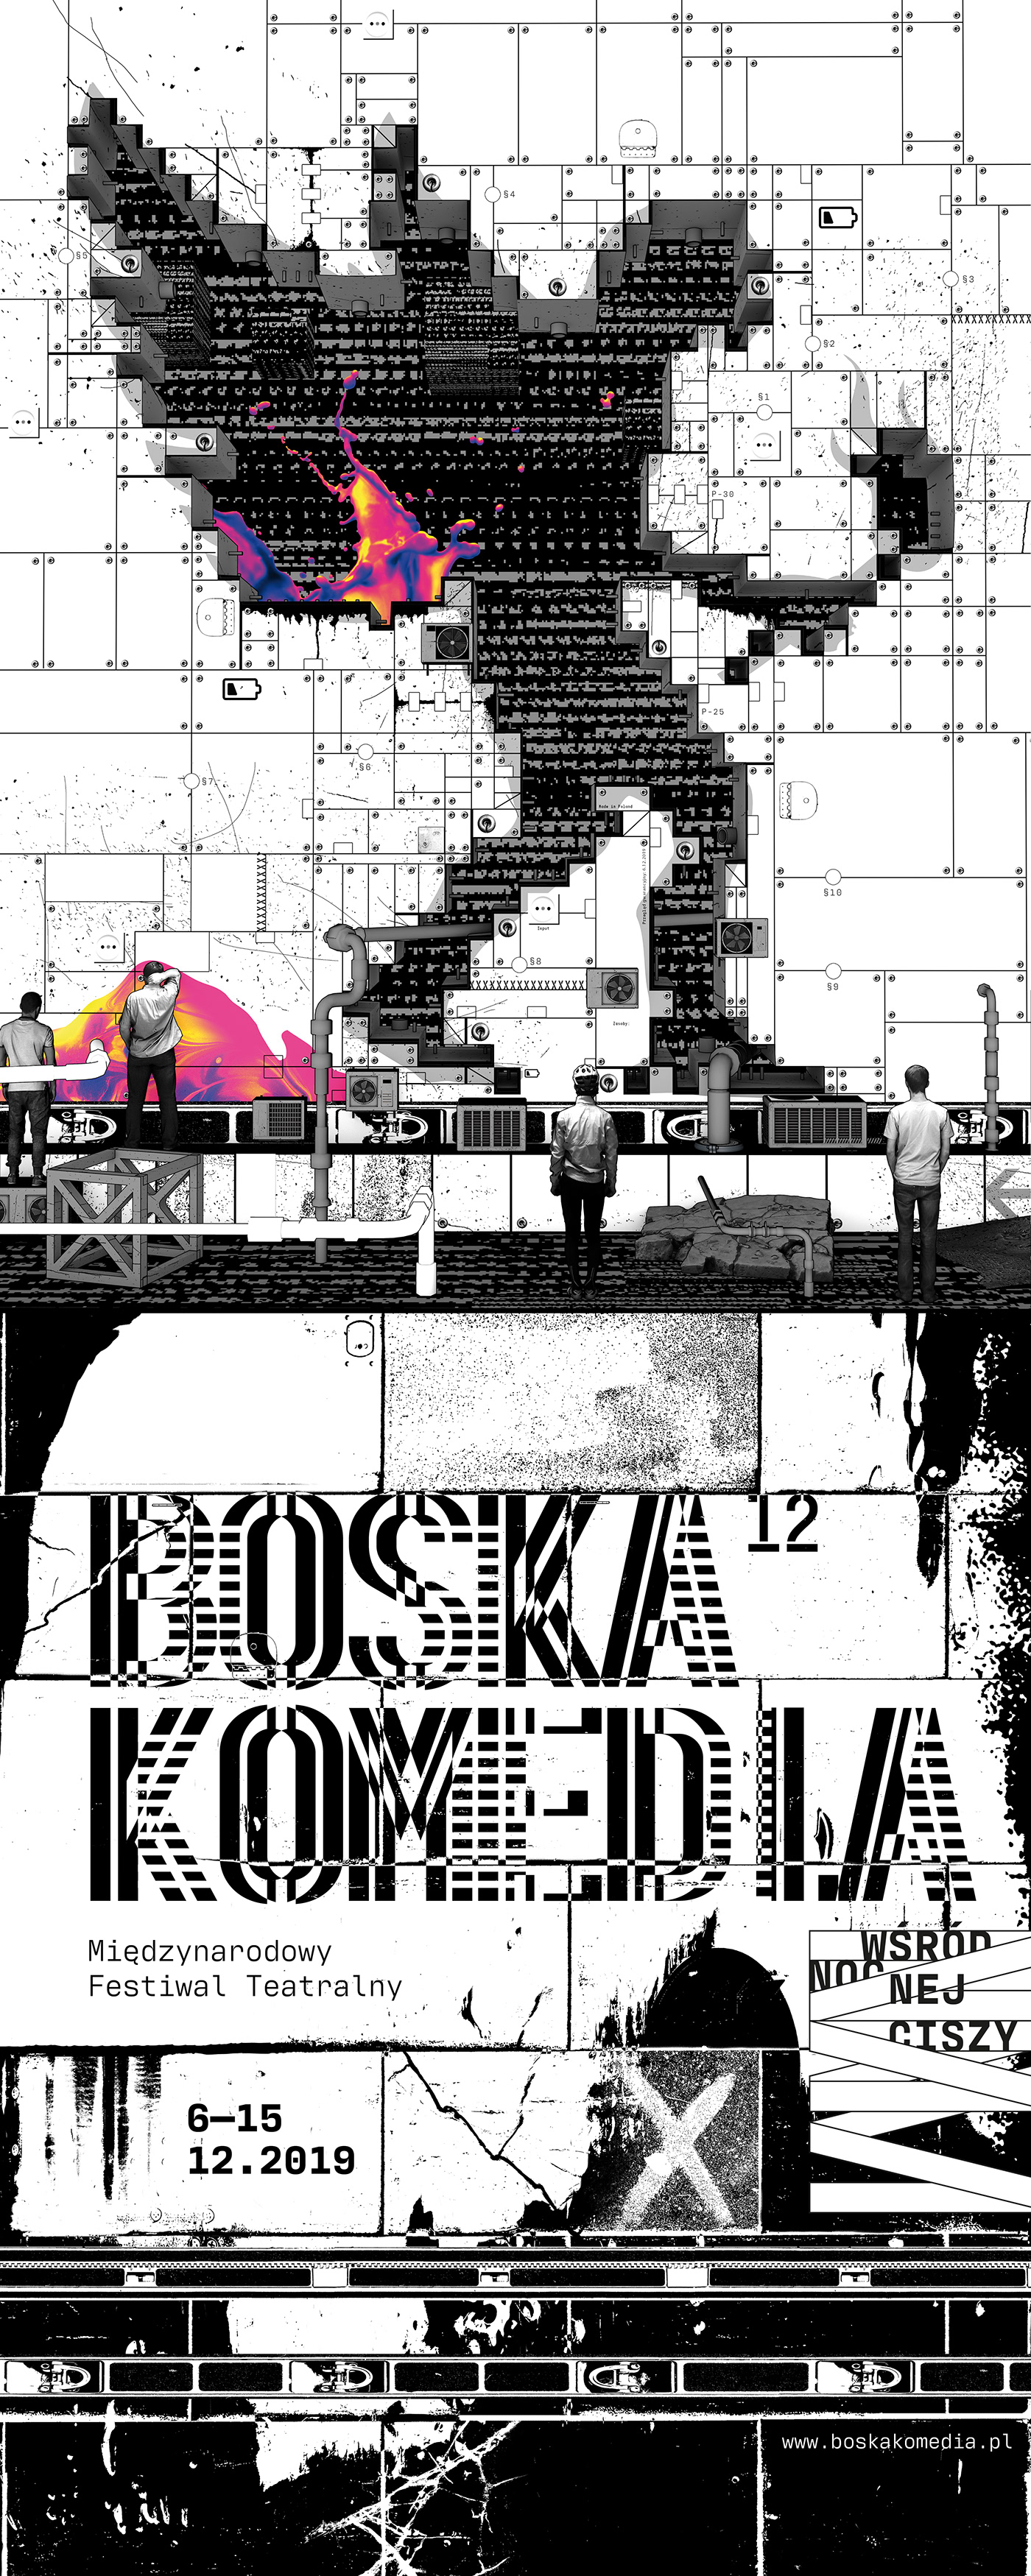 Theatre festival krakow poland 3D SF Dystopia industrial divine comedy science